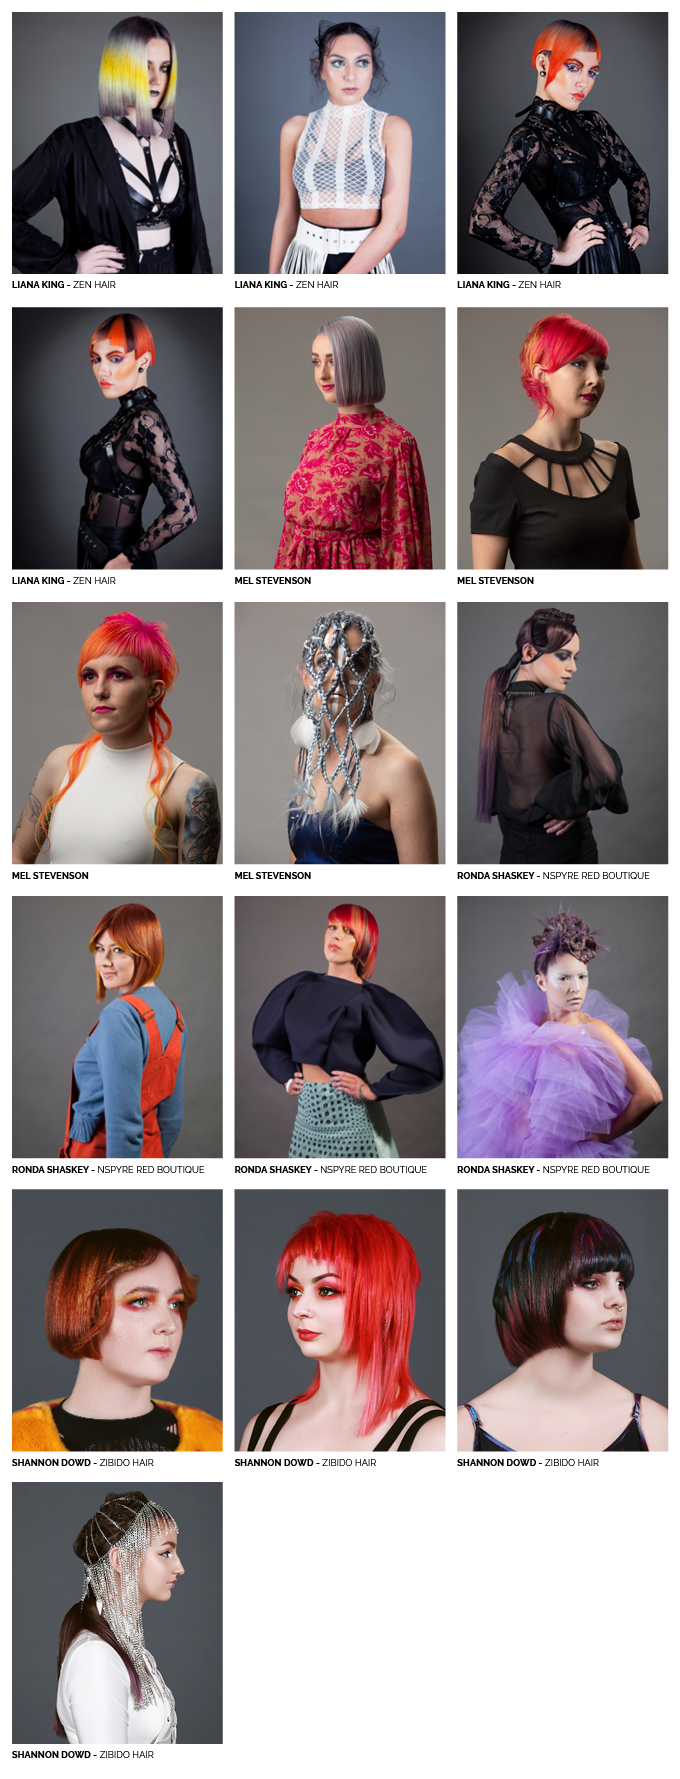 Blog Images for Creative Awards_Hair Stylist - Senior Stylist